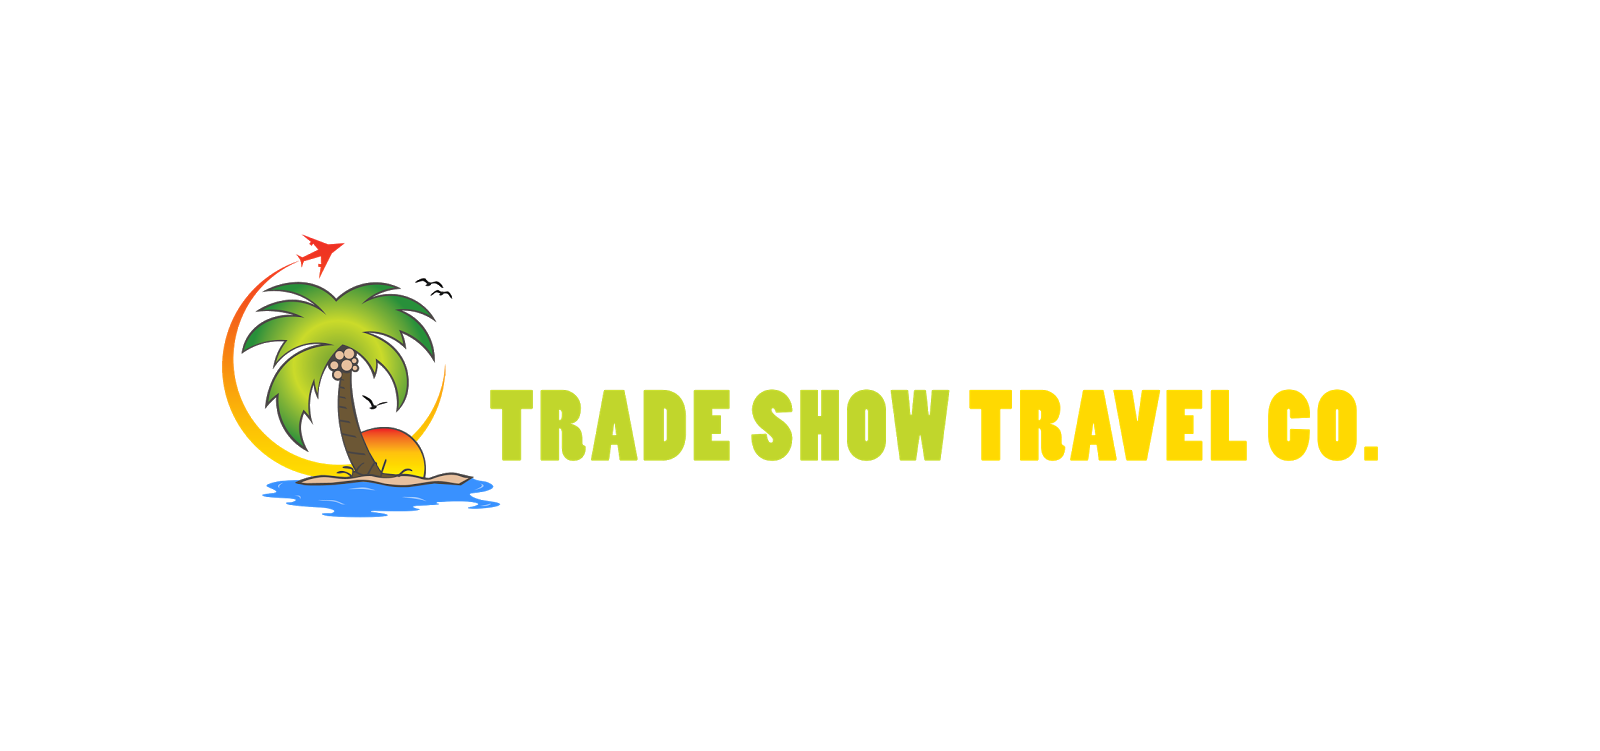 Trade Show Travel Company